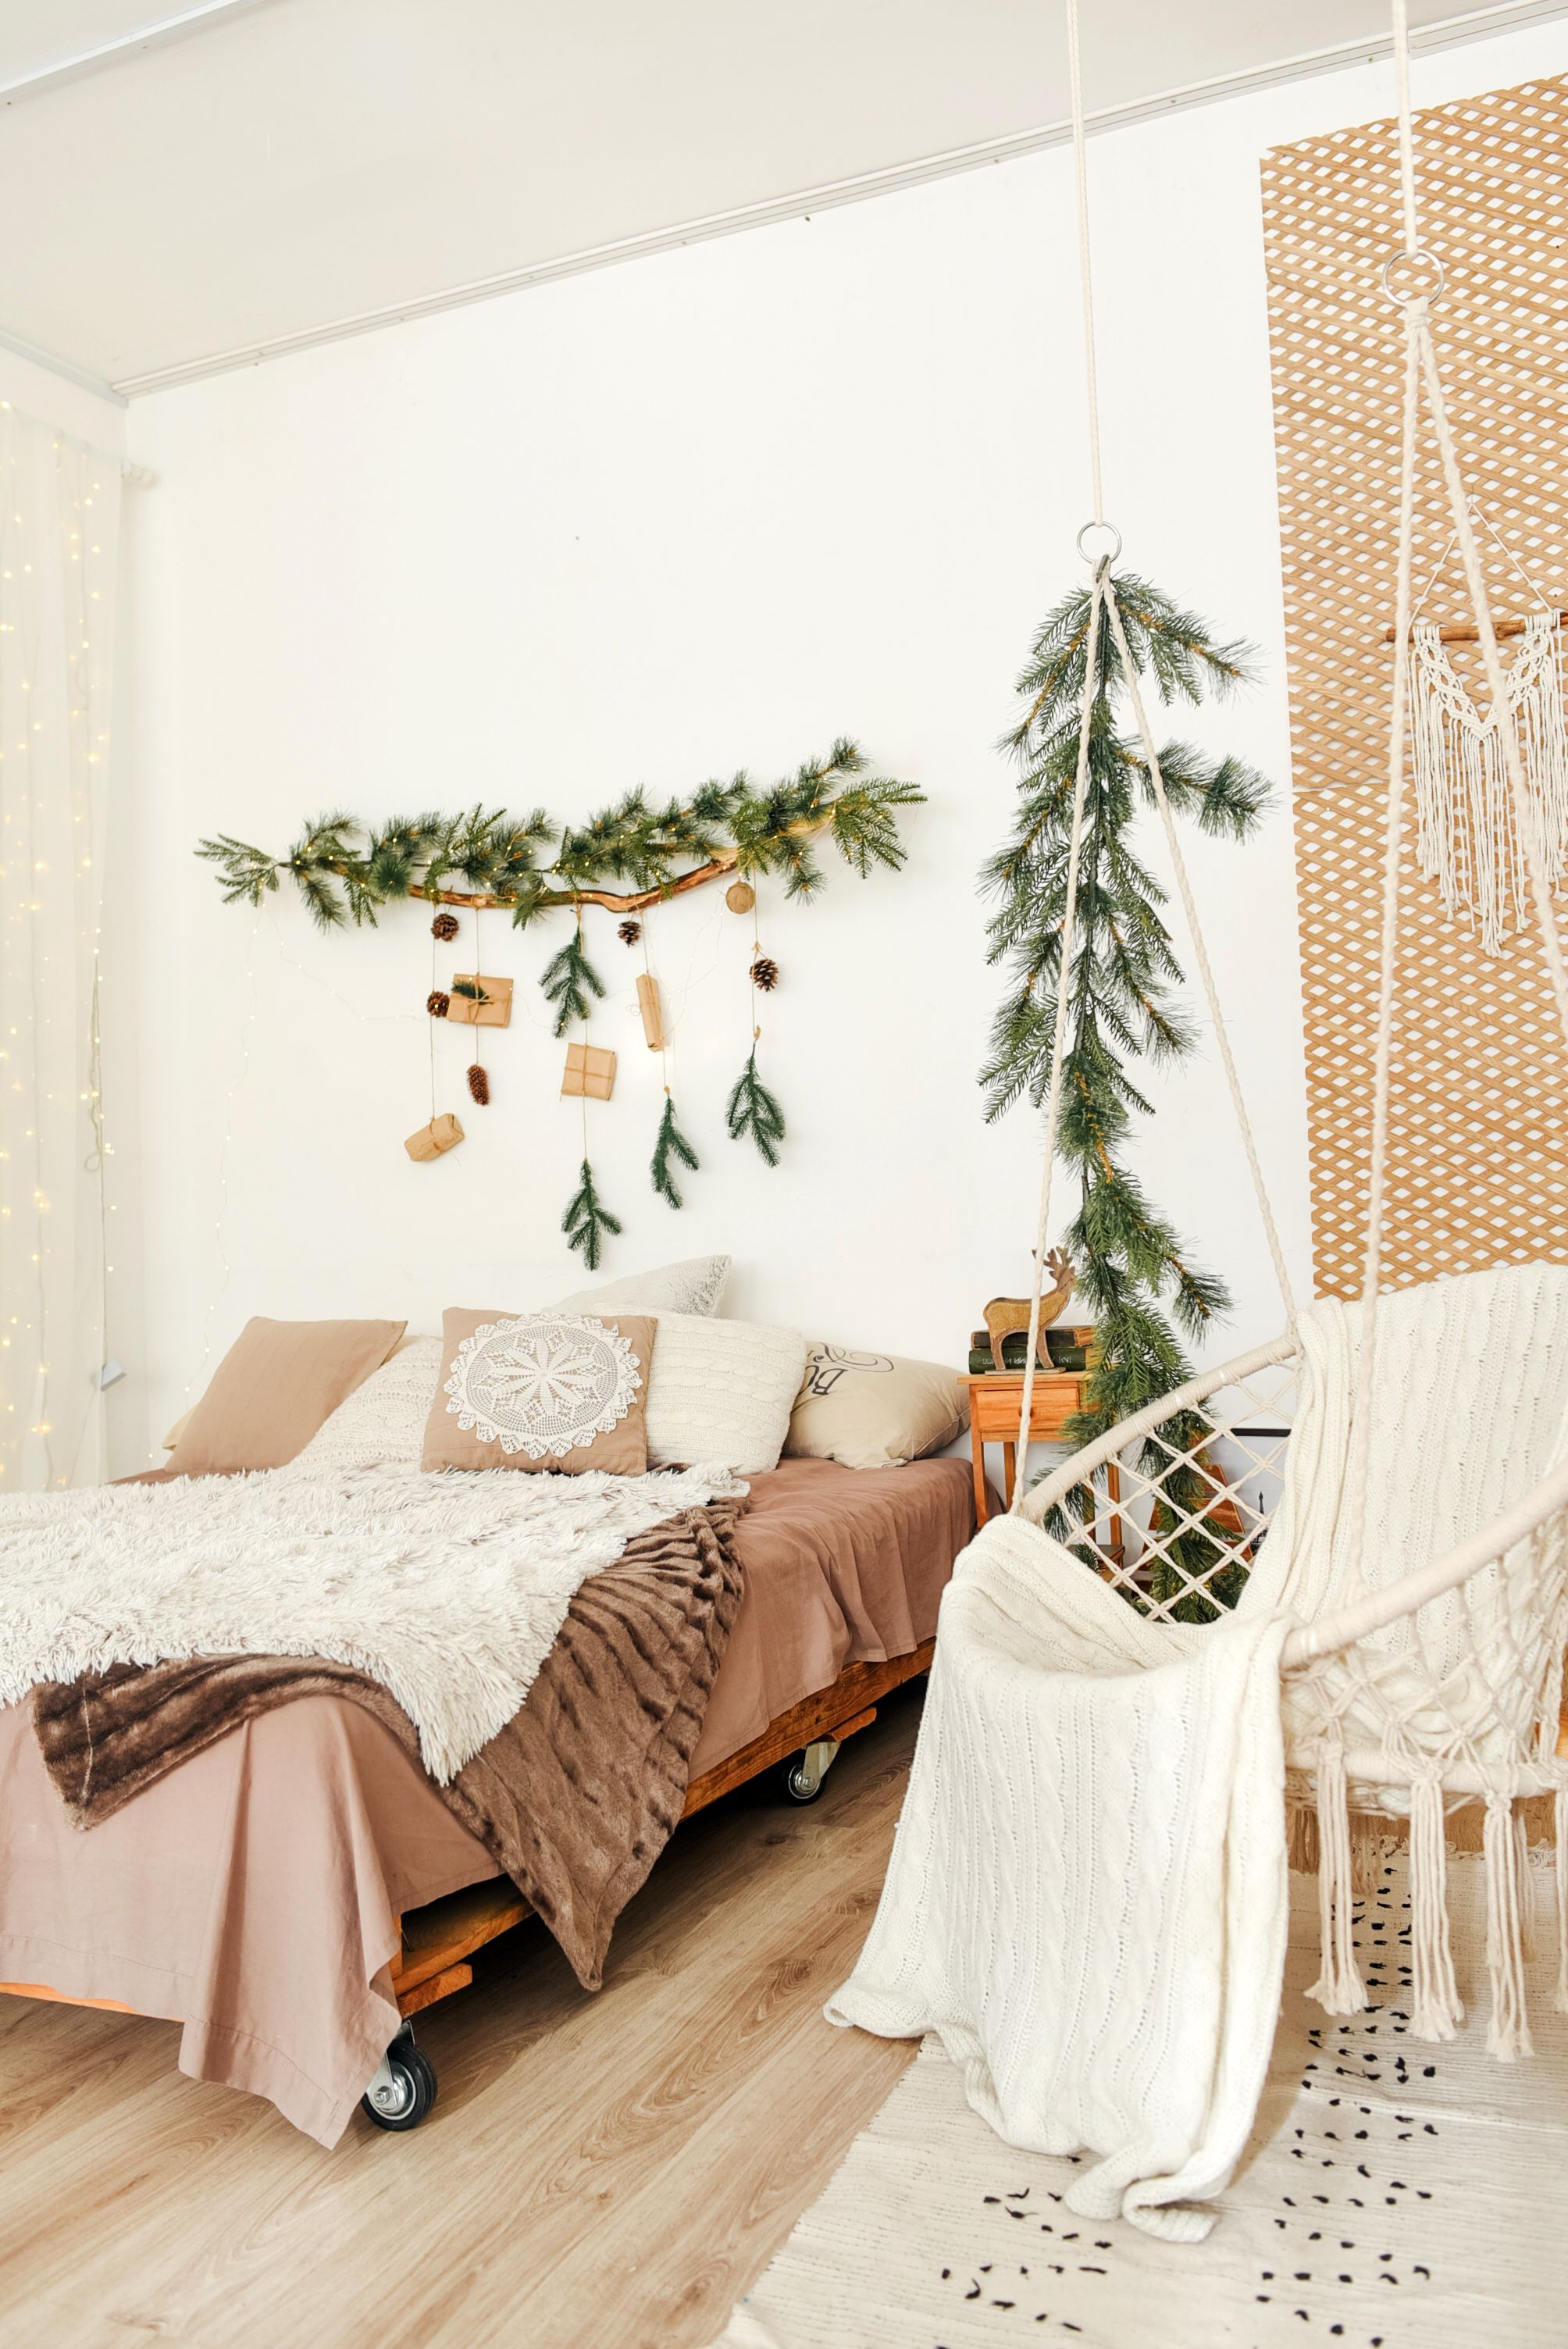 https://hips.hearstapps.com/hmg-prod/images/christmas-bedroom-decor-new-year-christmas-royalty-free-image-1697831141.jpg